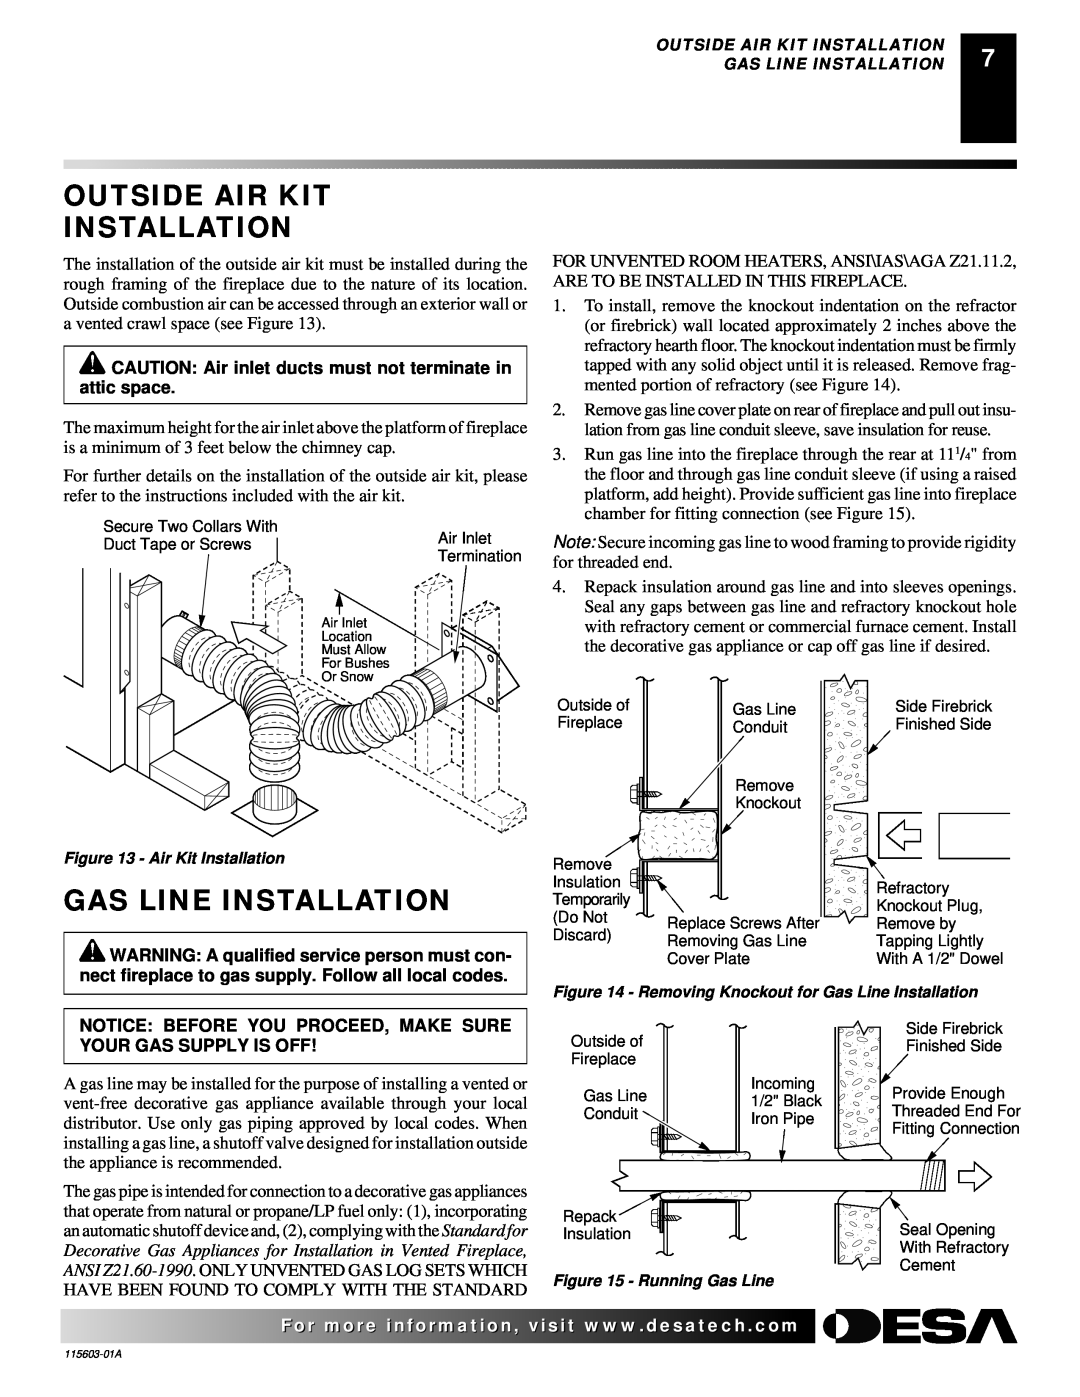 Desa (V)3612ST operating instructions Outside Air Kit Installation, Gas Line Installation 